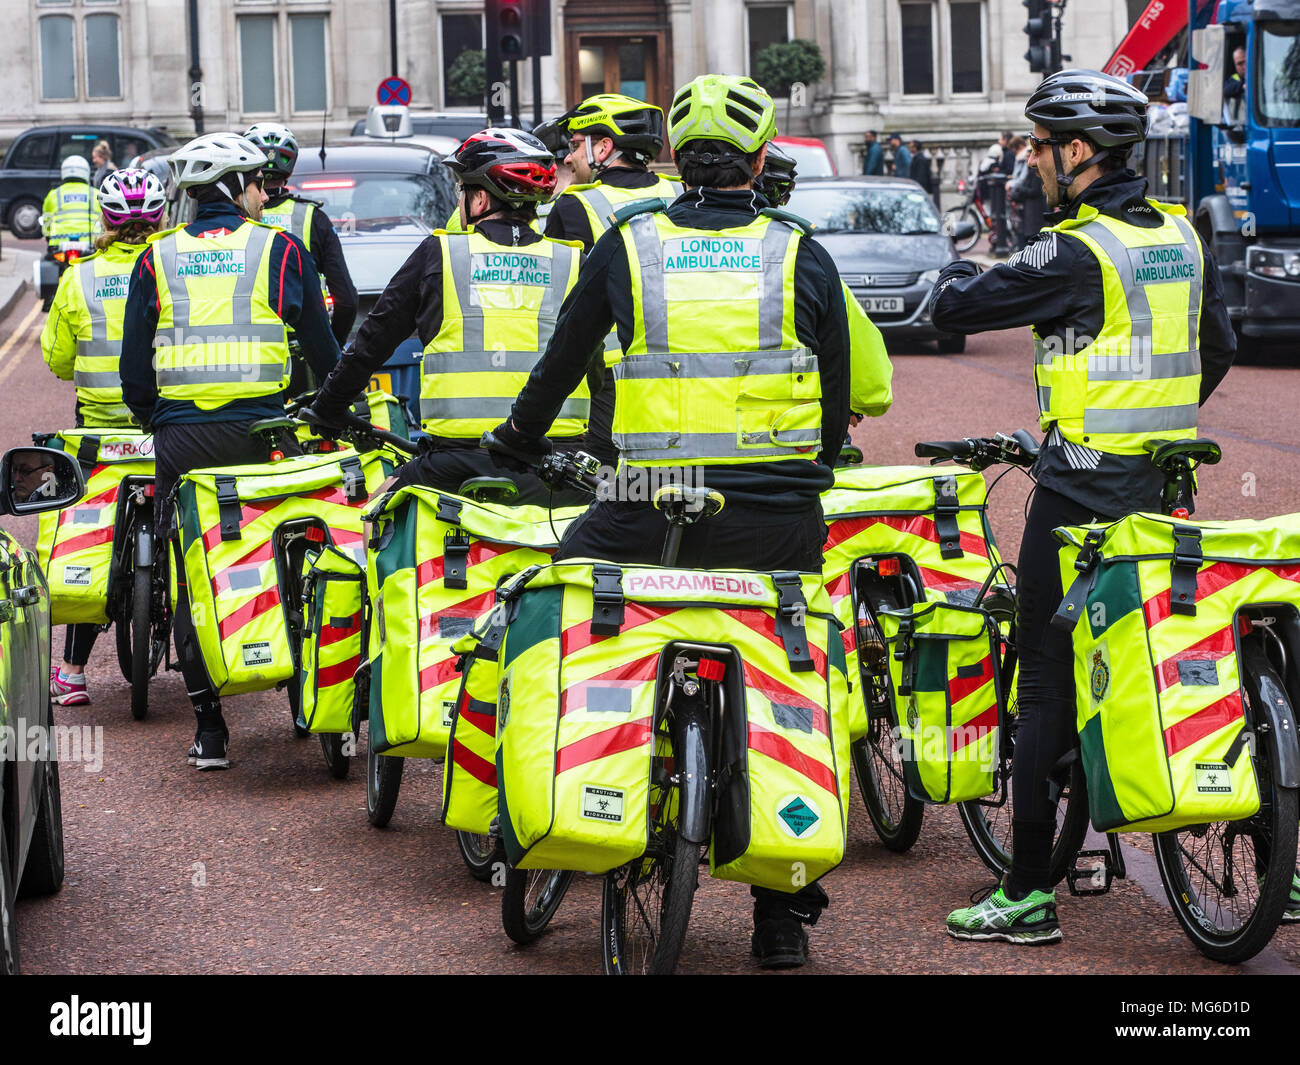 London Bicycle Paramedics in Central London UK. London Ambulance Cycle responders. Stock Photo